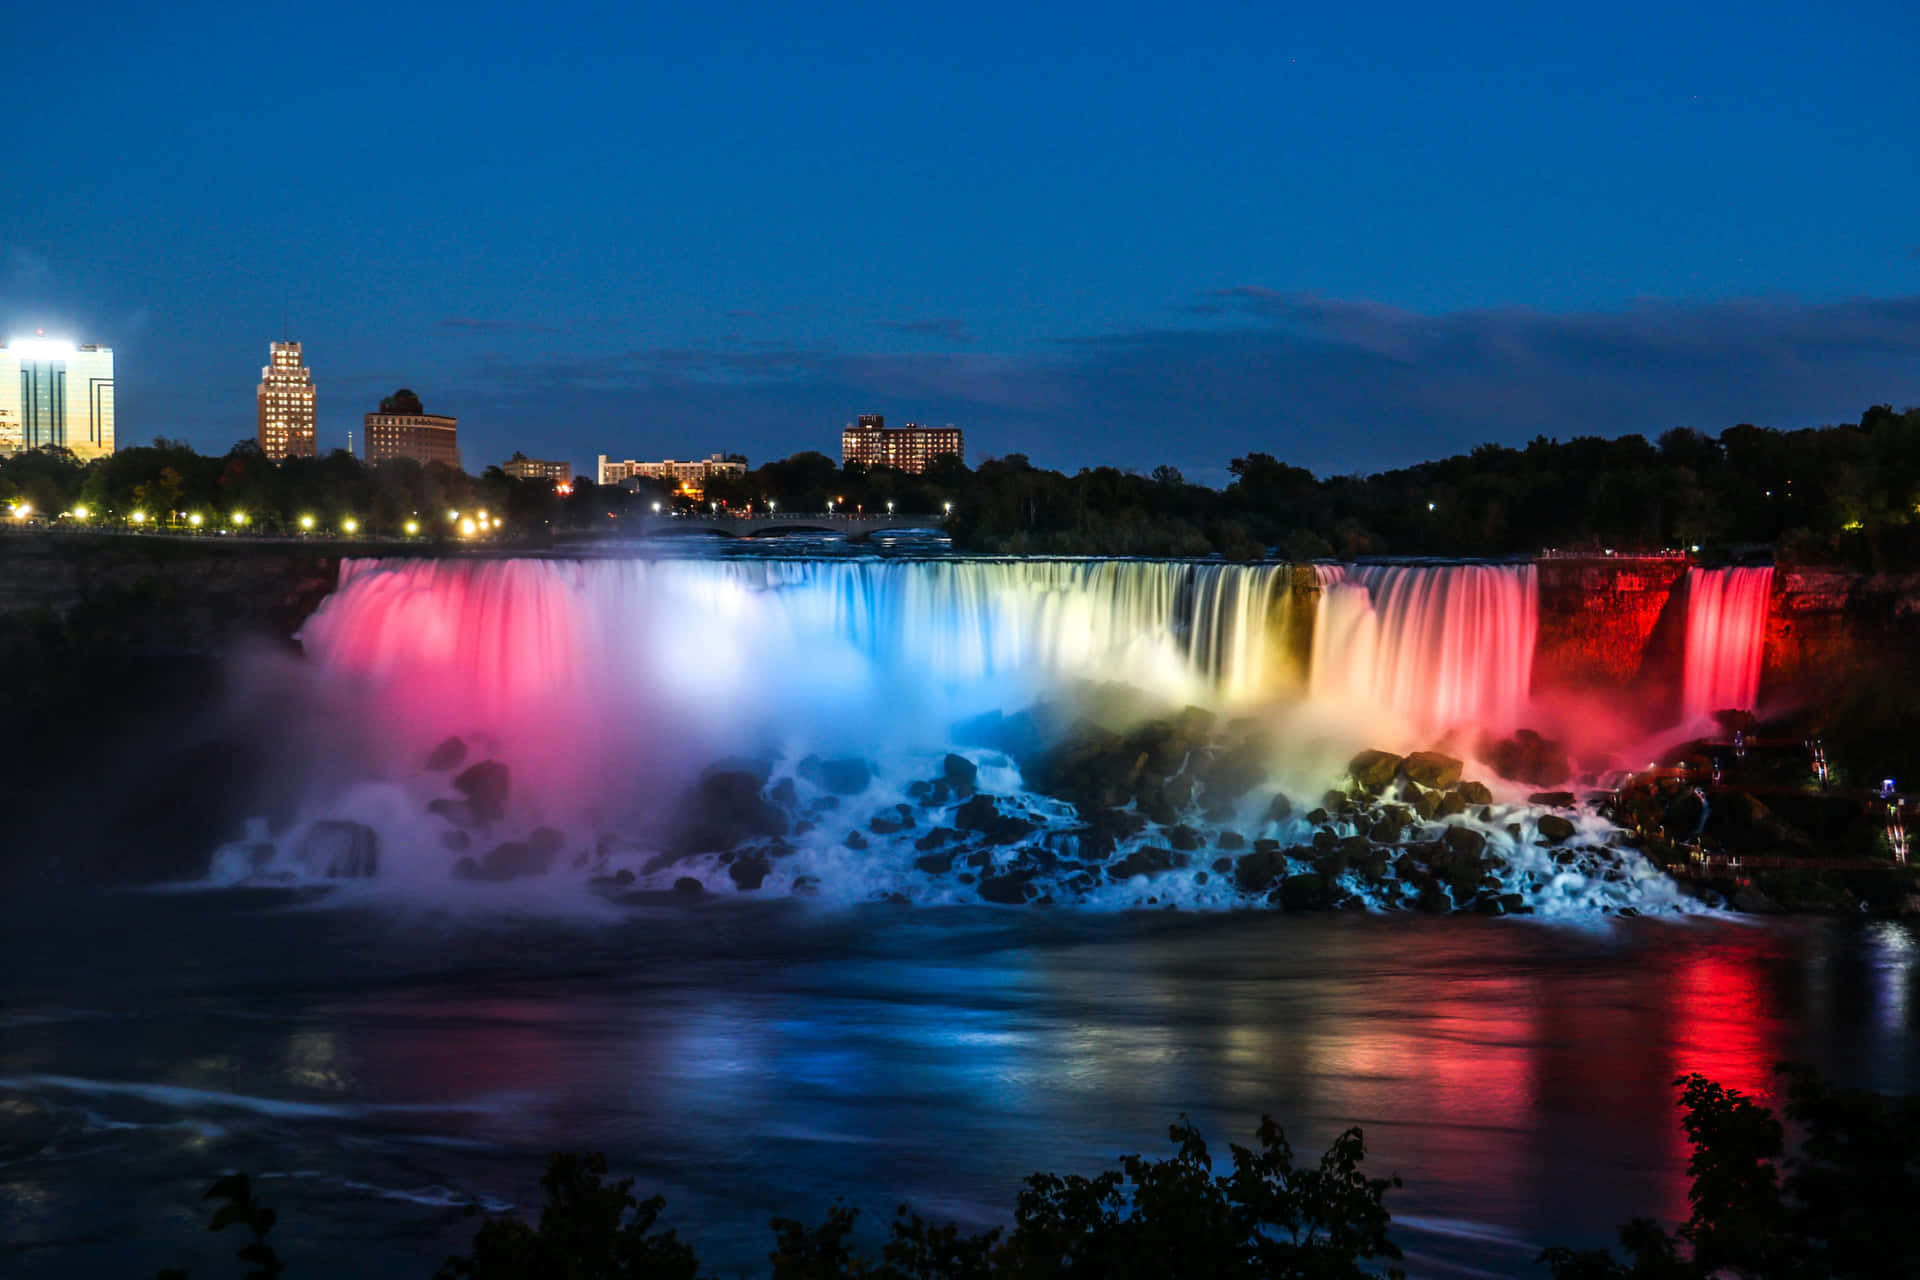 Et mesmeriserende syn af Niagara Falls belyst i morgensolen.